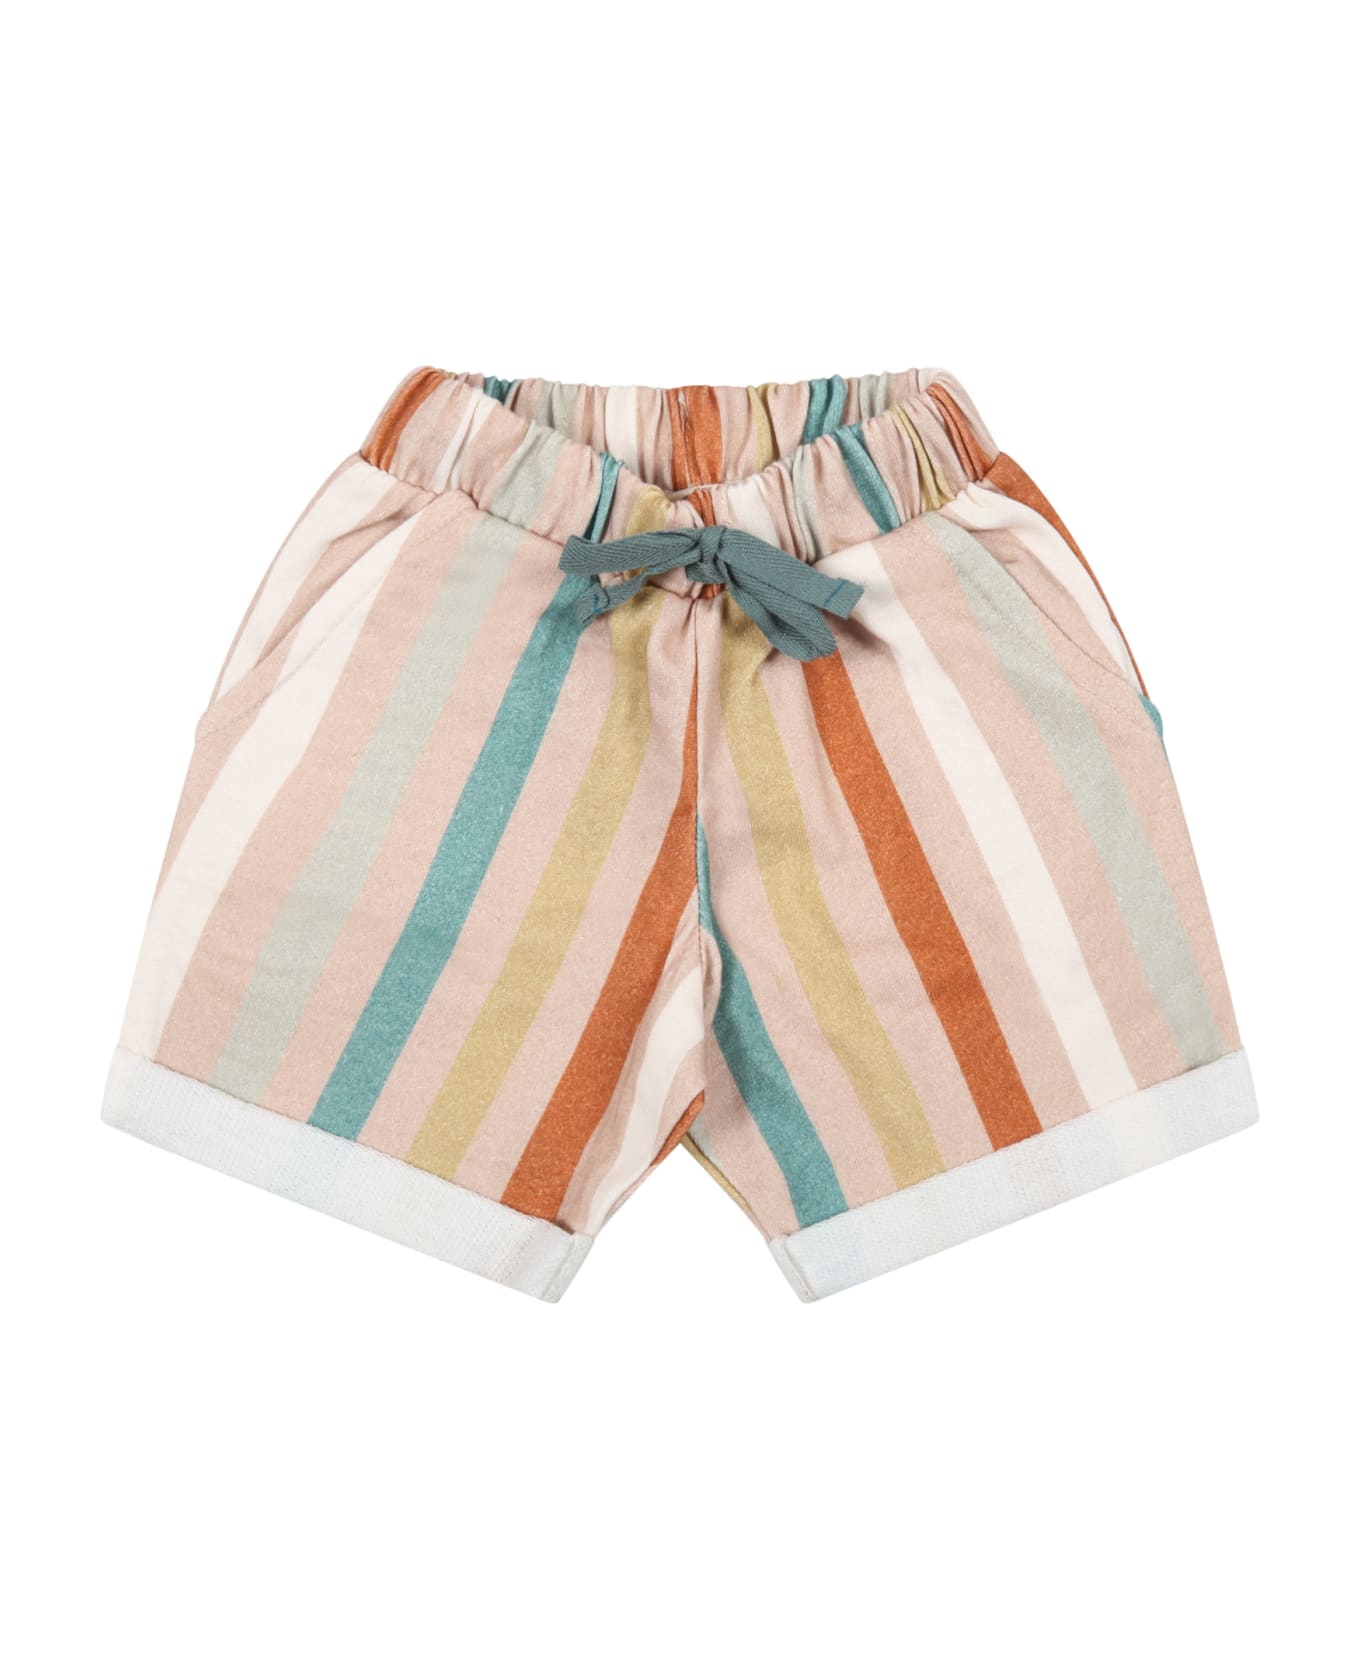 Coco Au Lait Multicolor Shorts For Baby Girl - Multicolor